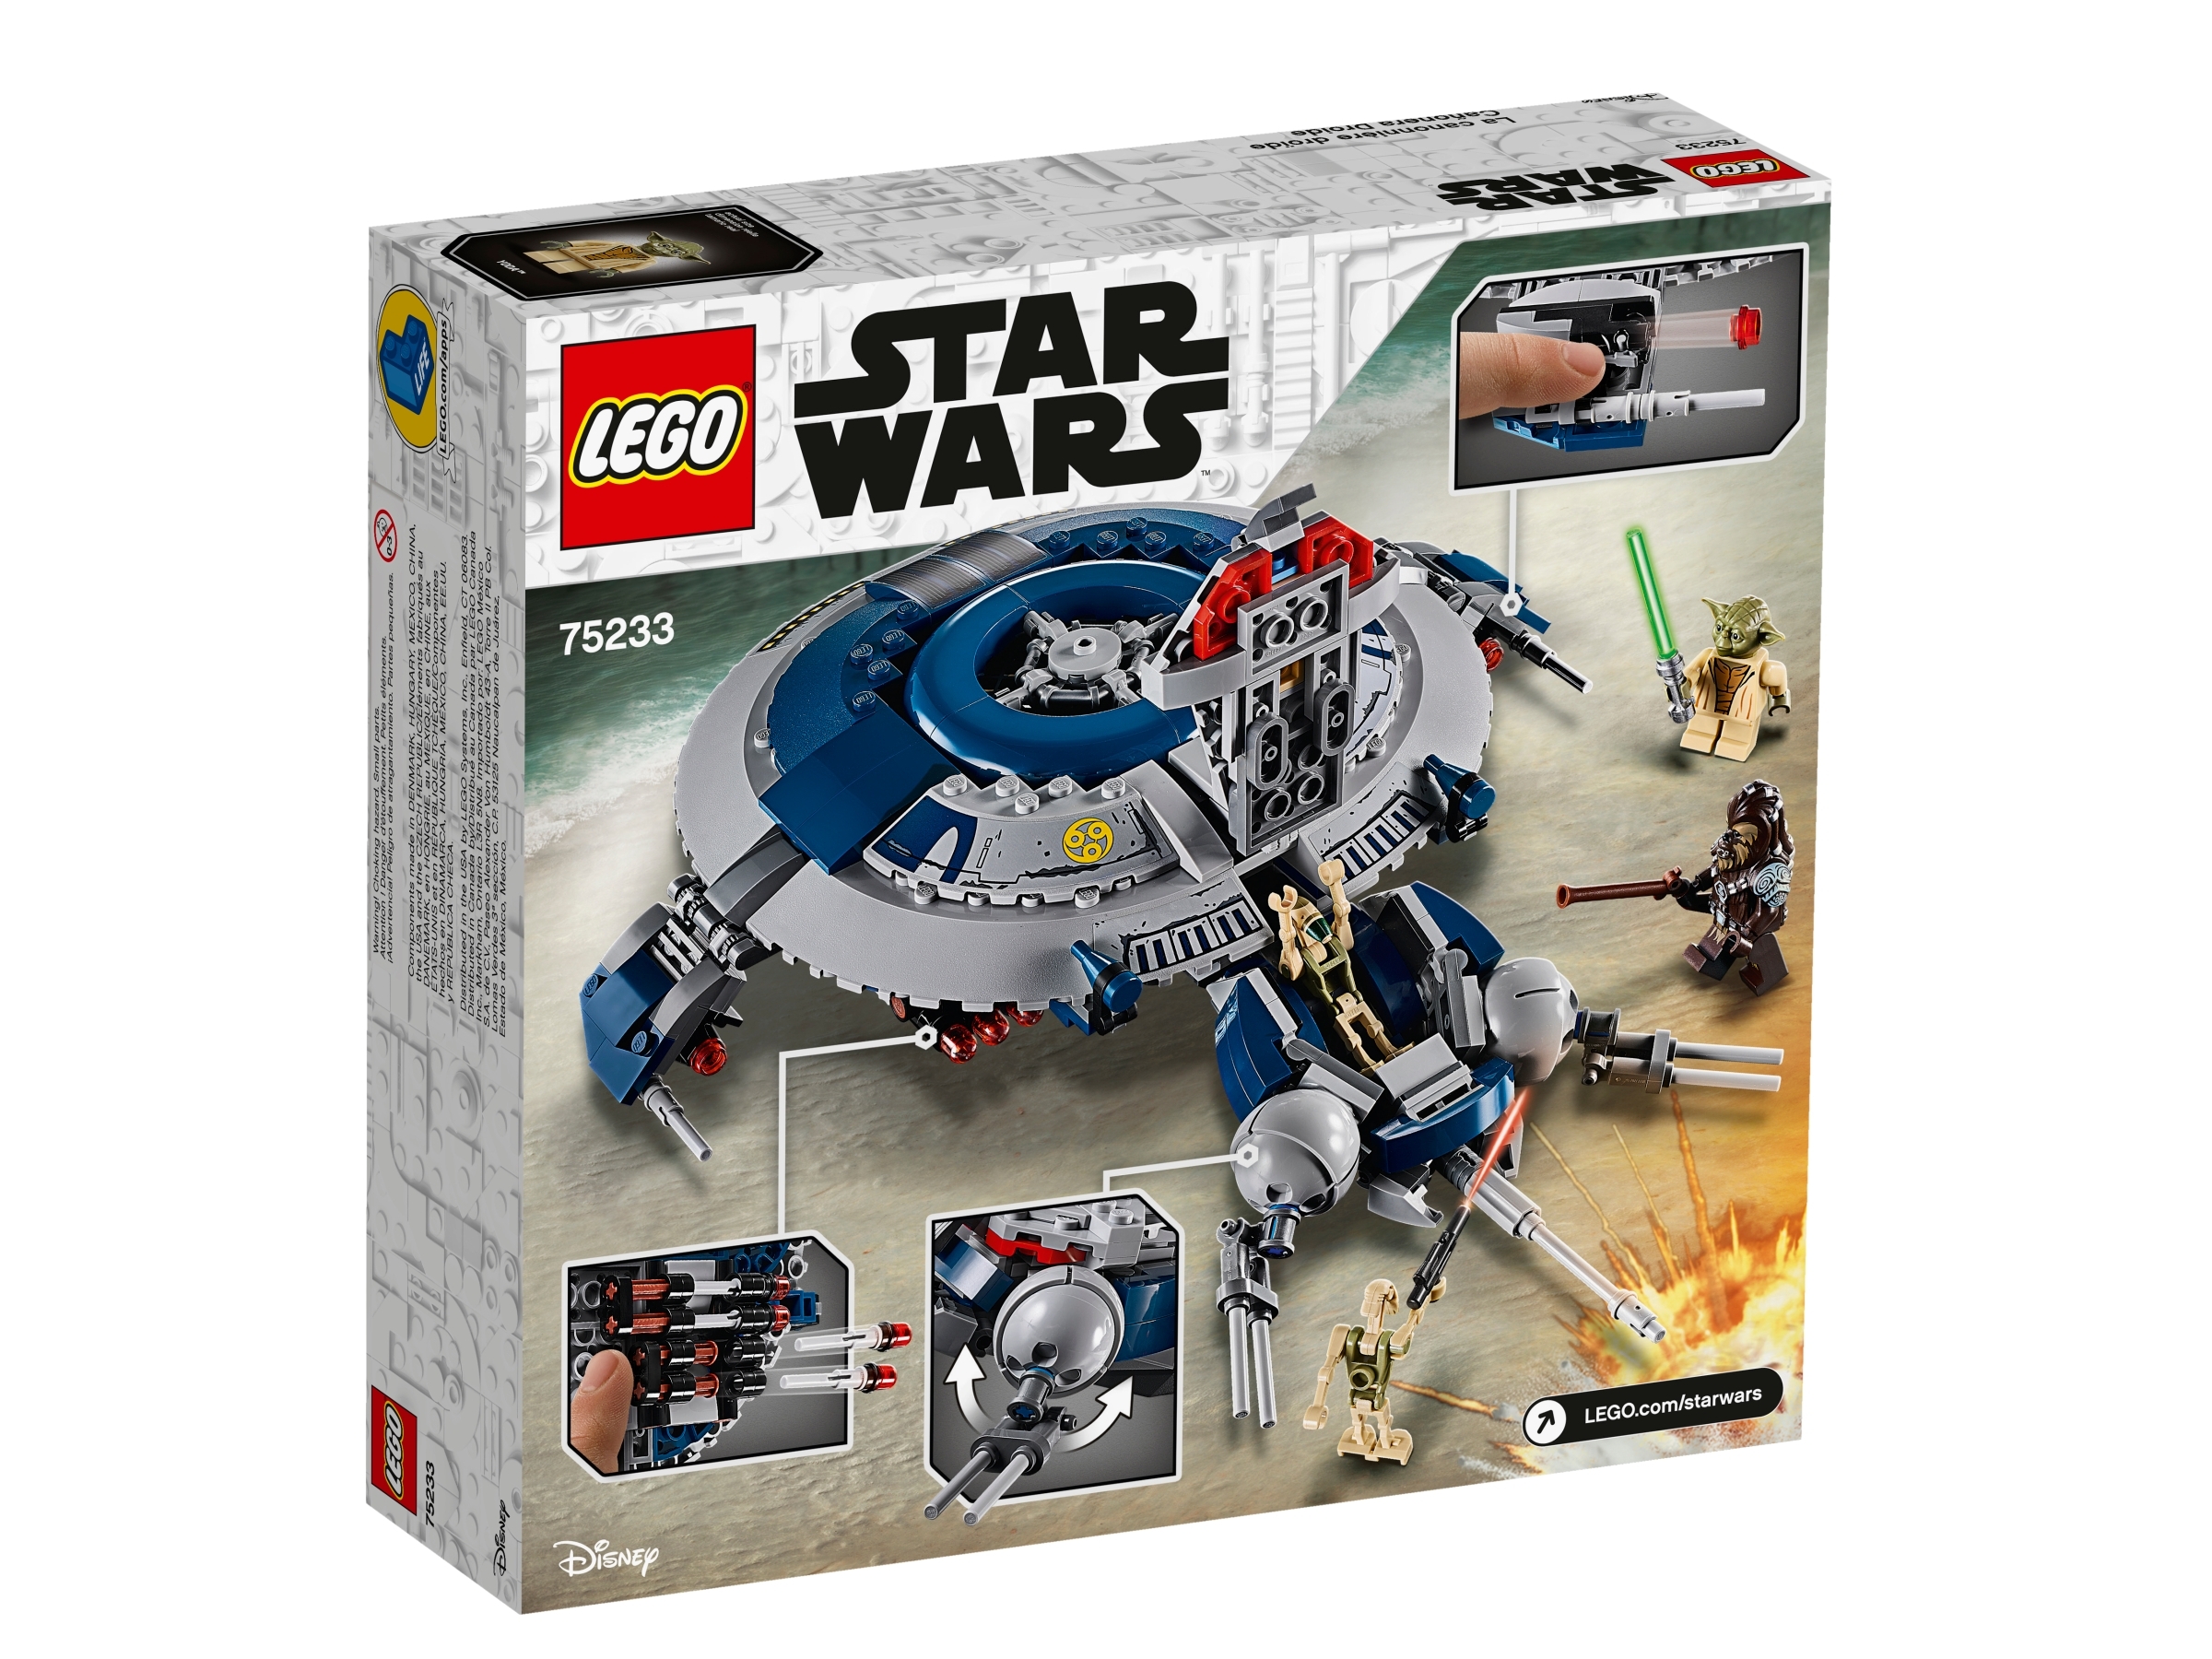 Type mini figure lego star wars droid gunship